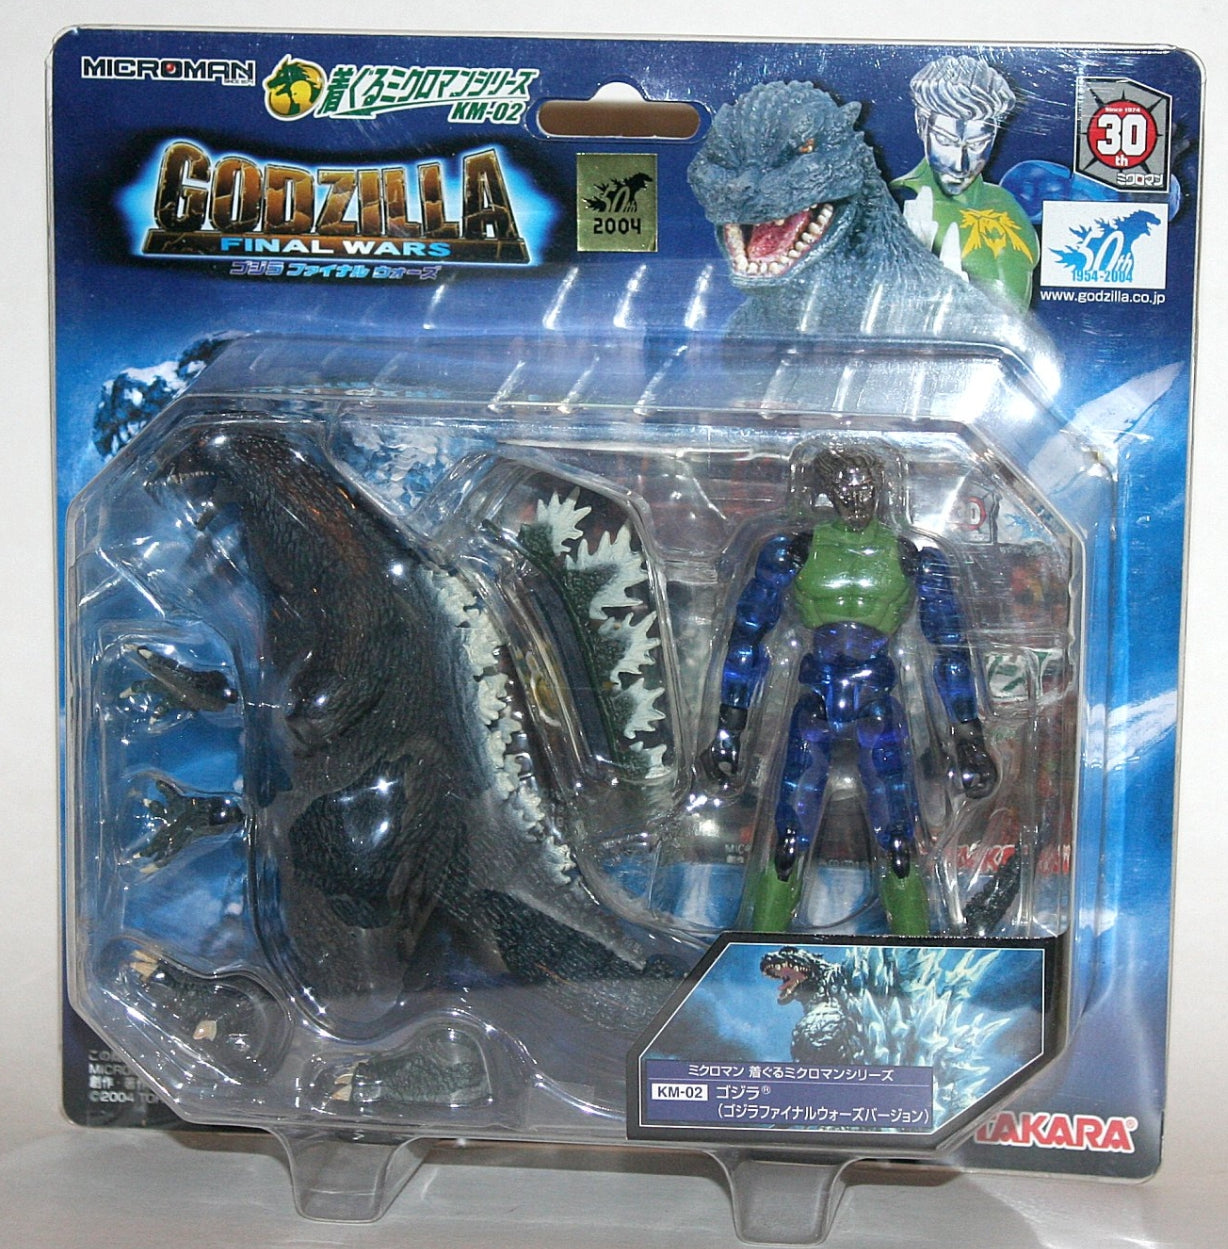 Takara Microman Micronauts KM-02 Godzilla Final Wars Trading Figure